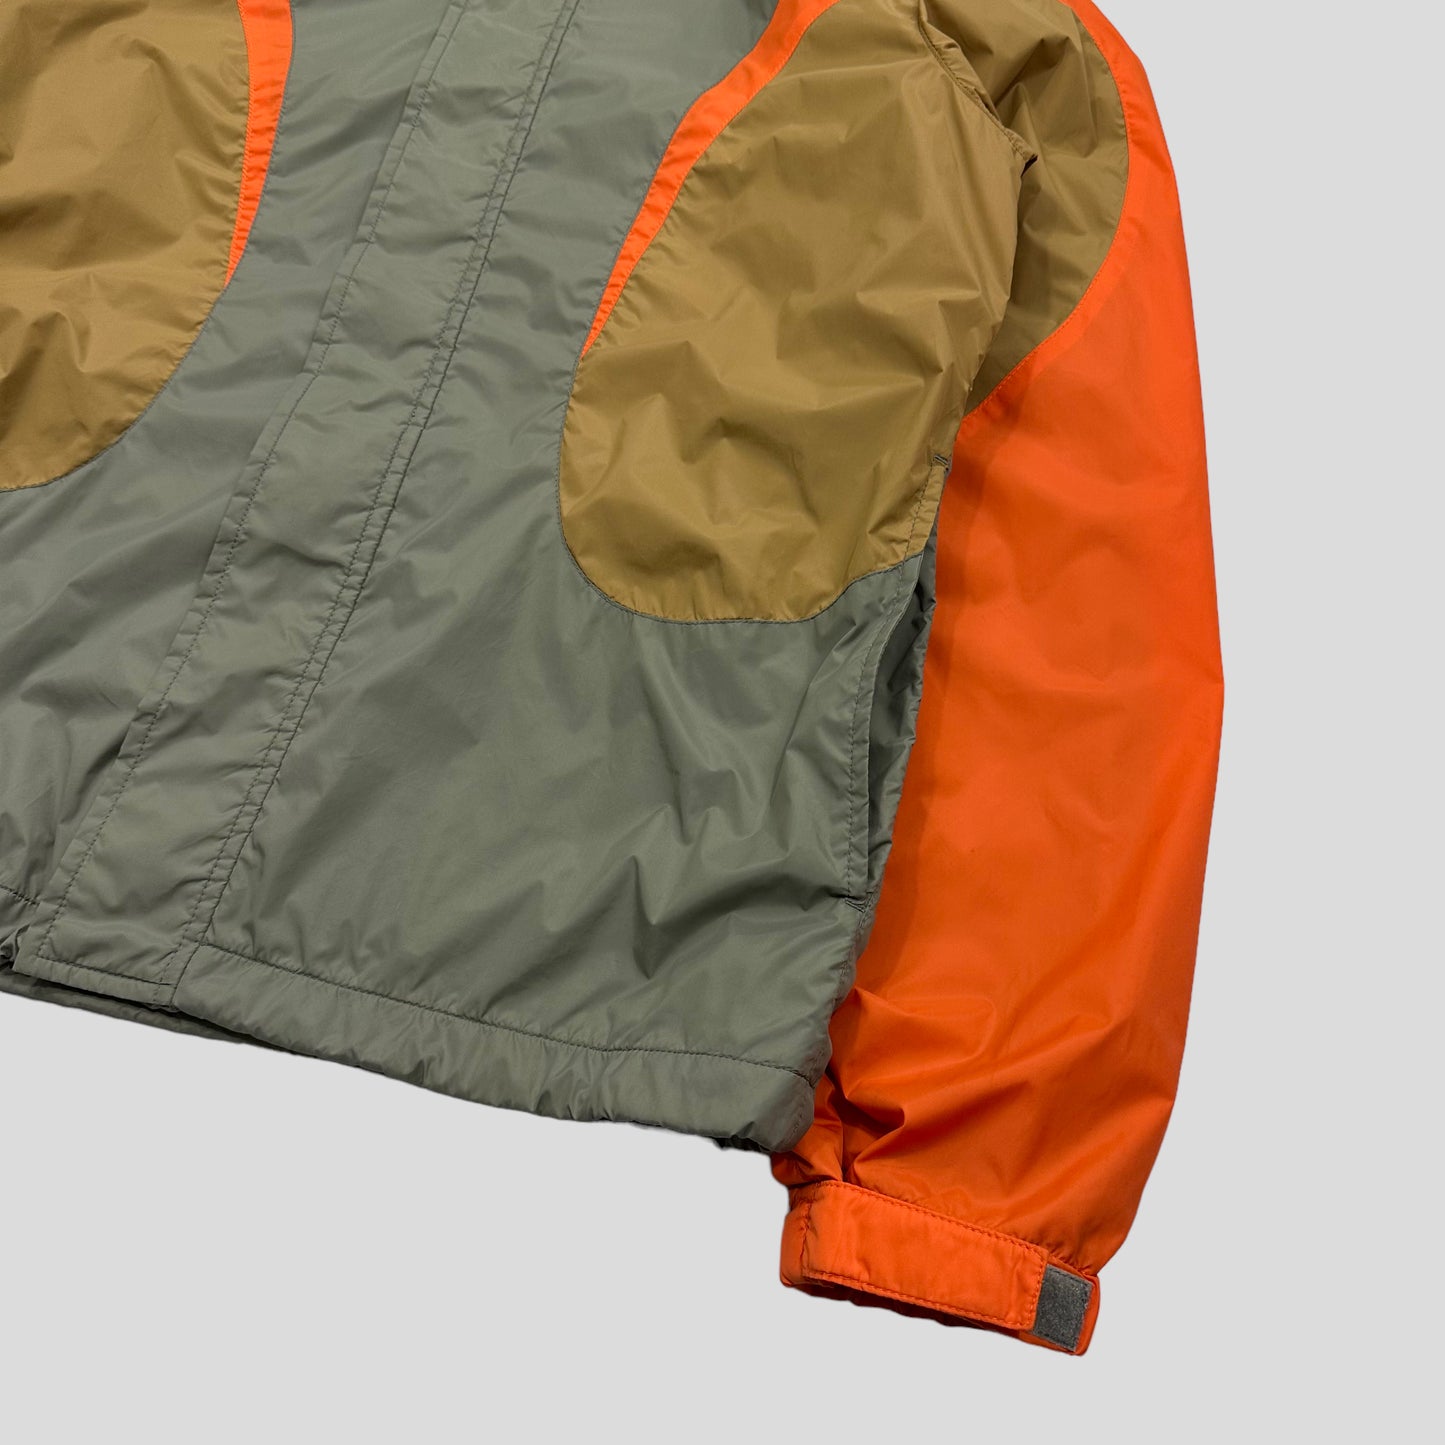 CDG Shirt 00’s Technical Nylon Curve Panelled Jacket - M